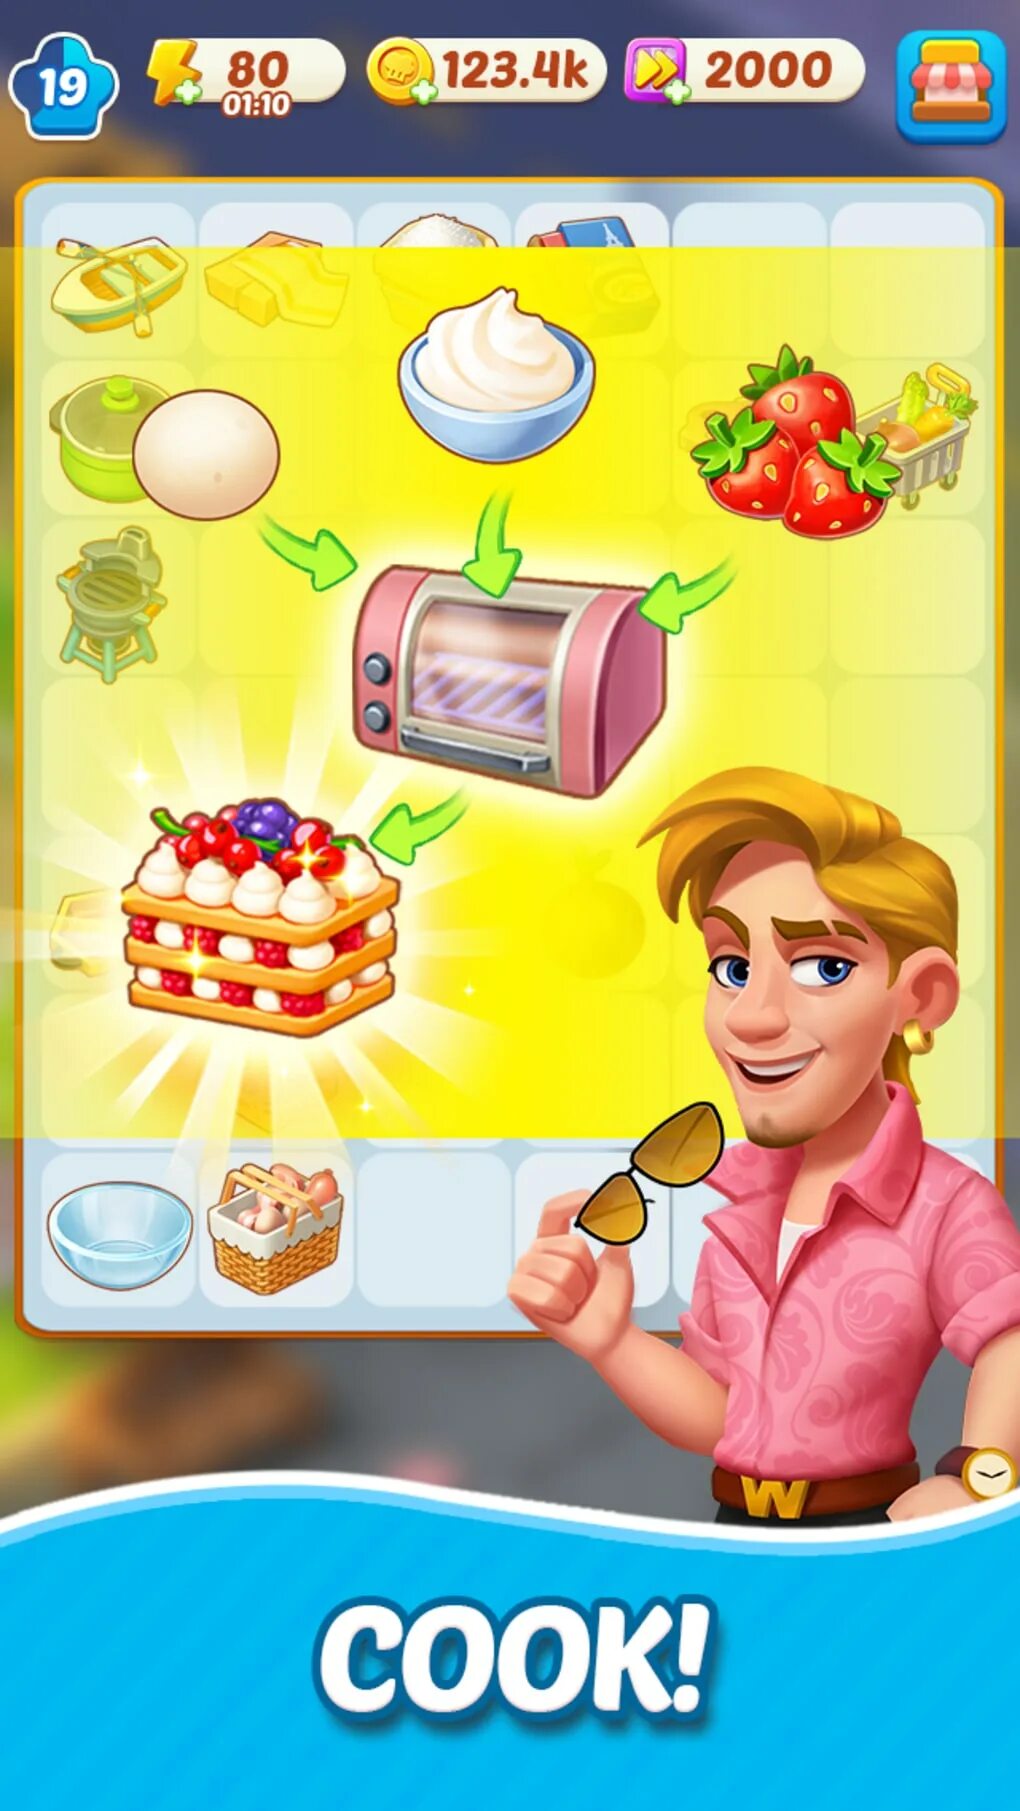 Игра merge Cooking. Merge Cooking:Theme Restaurant. Merge Cooking: Restaurant game. Merge cooking theme